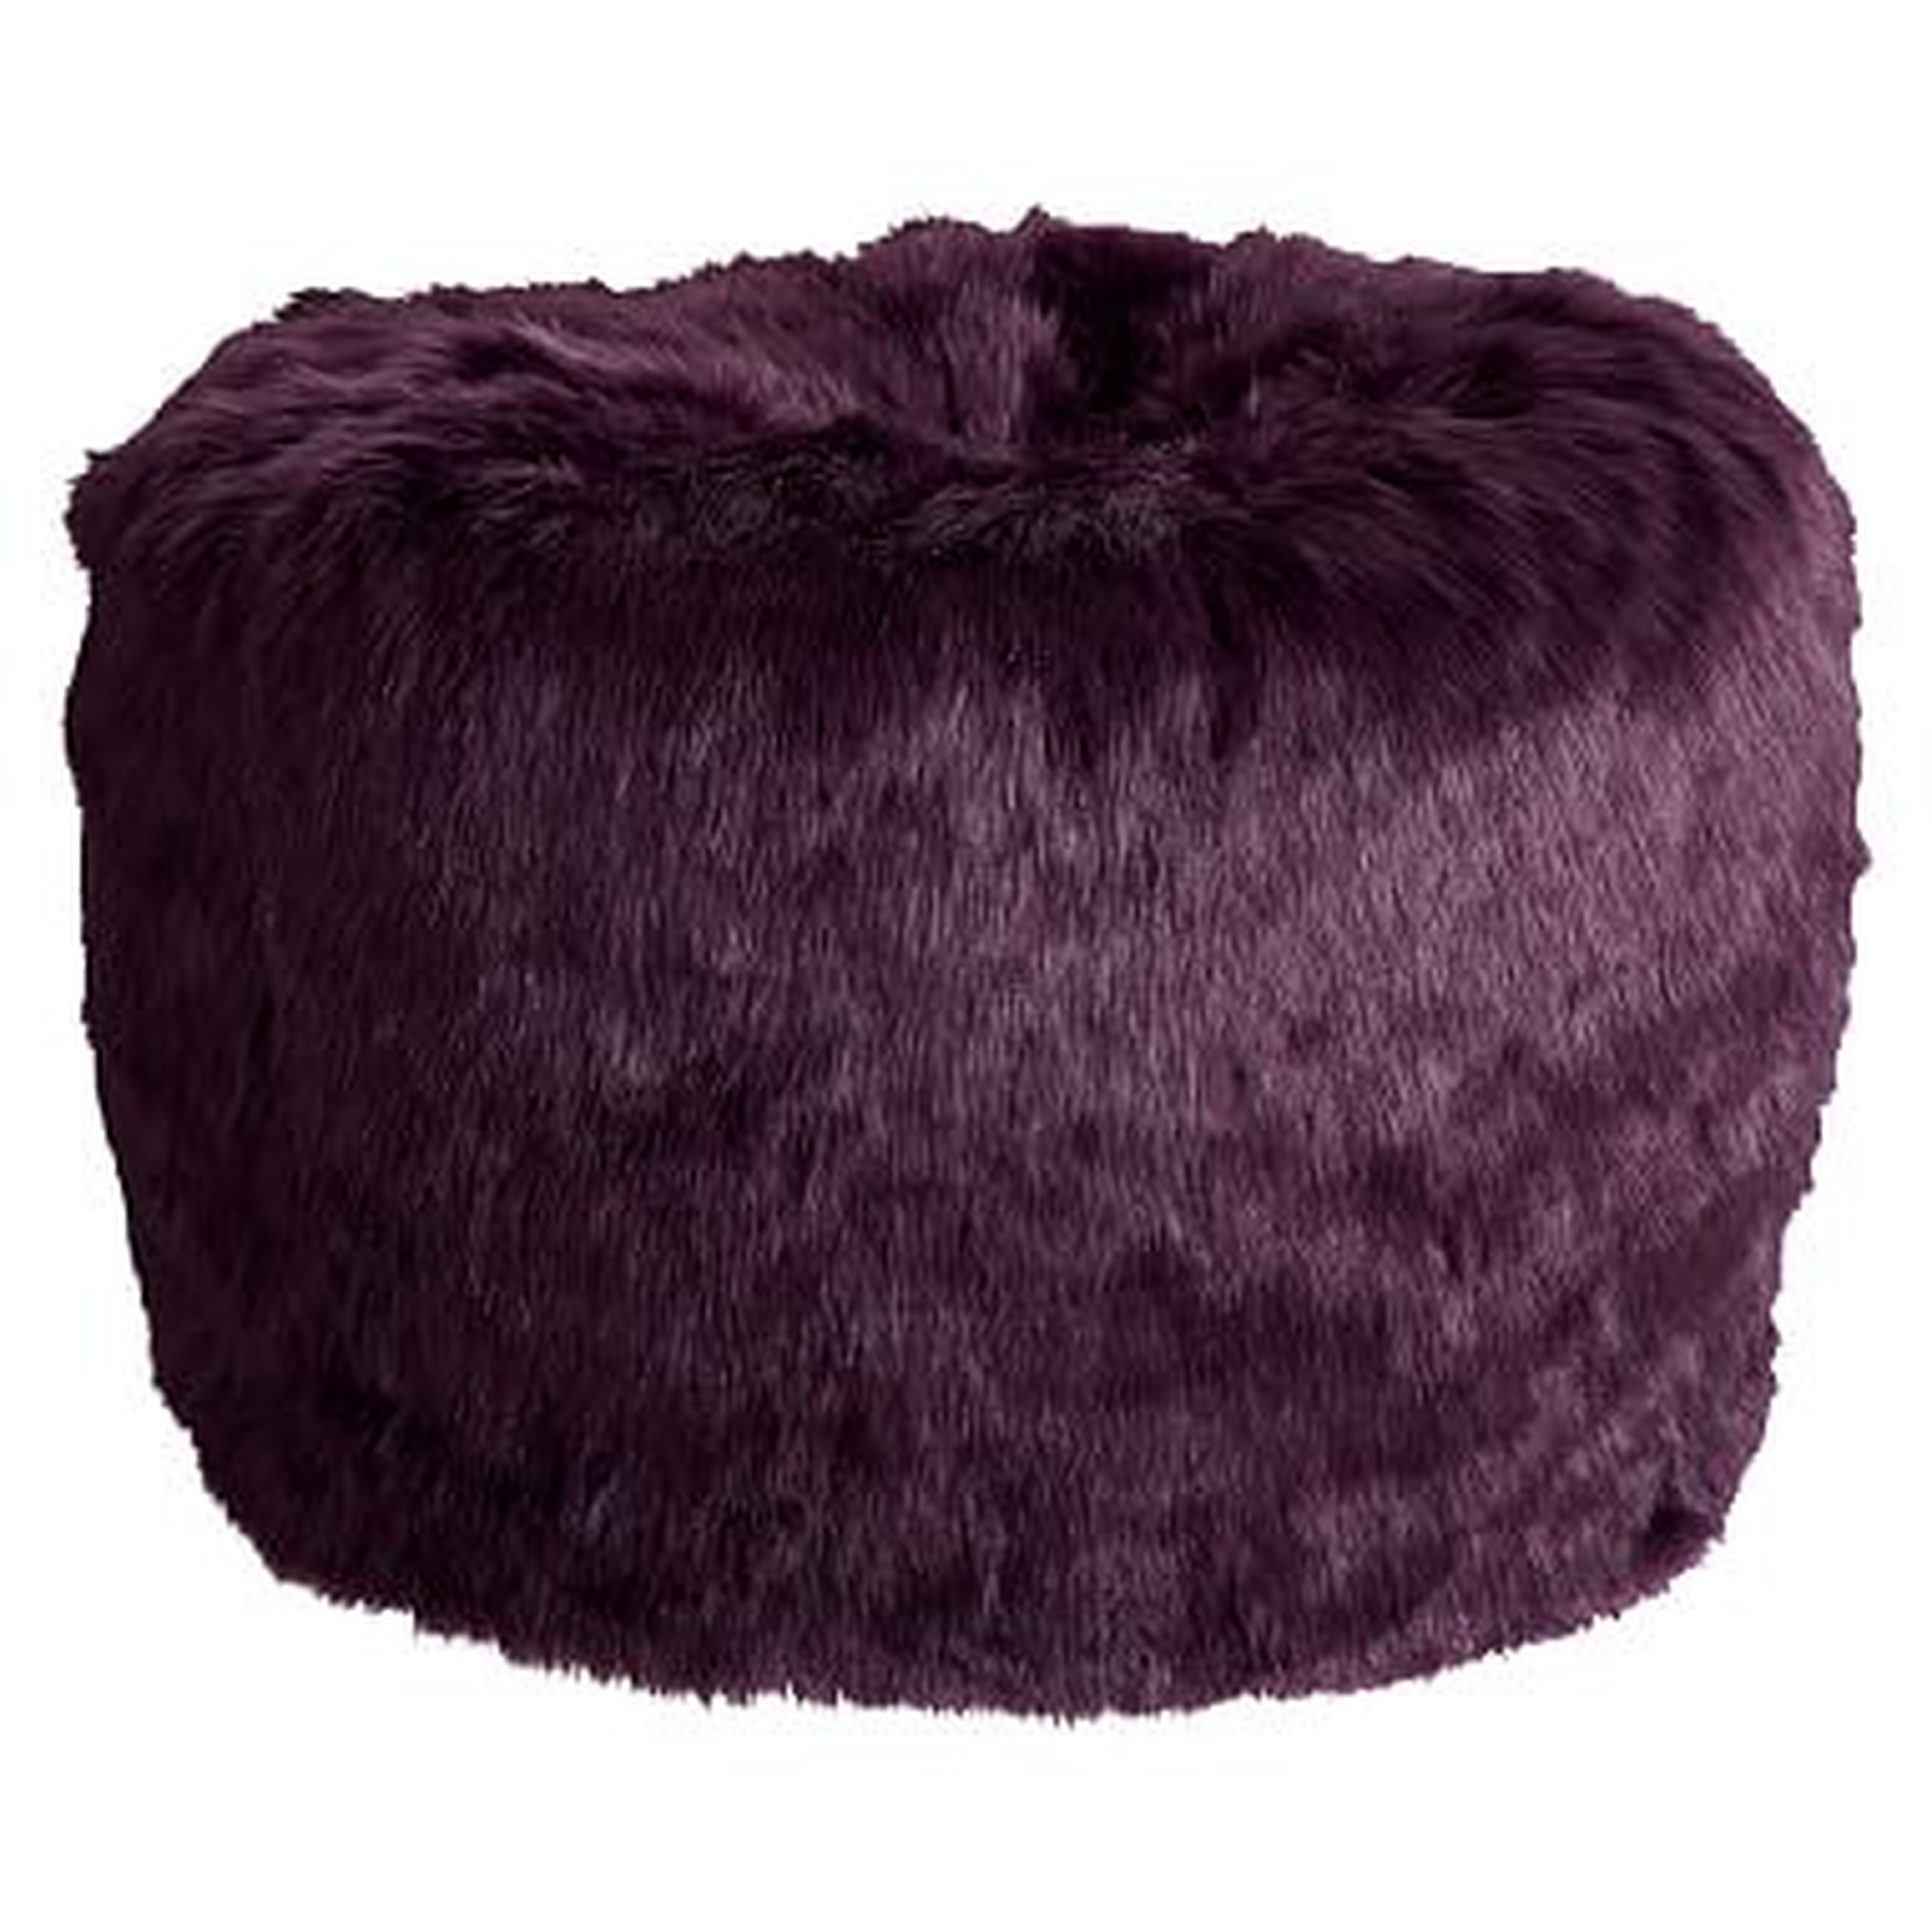 Anna Sui Purple Faux-Fur Beanbag, Slipcover + Insert, Large - Pottery Barn Teen